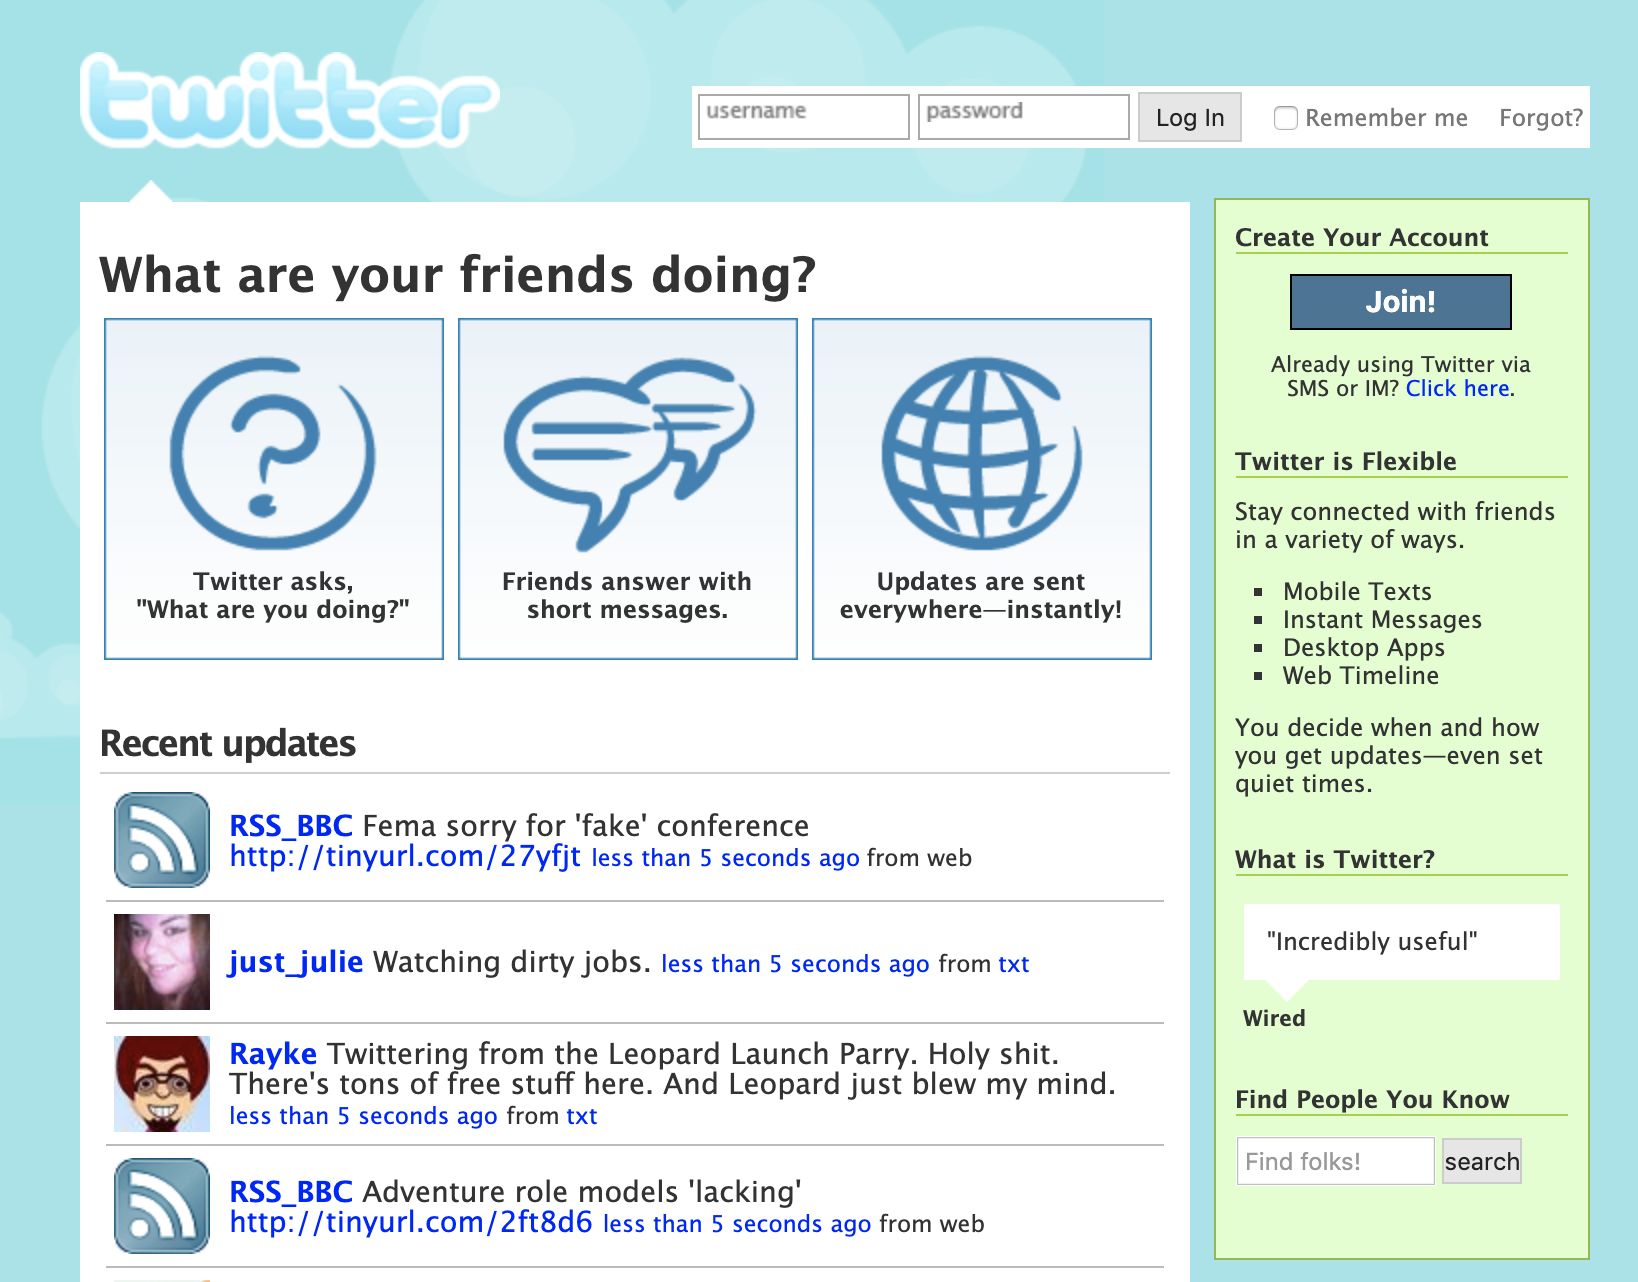 A screenshot of Twitter from 2007.